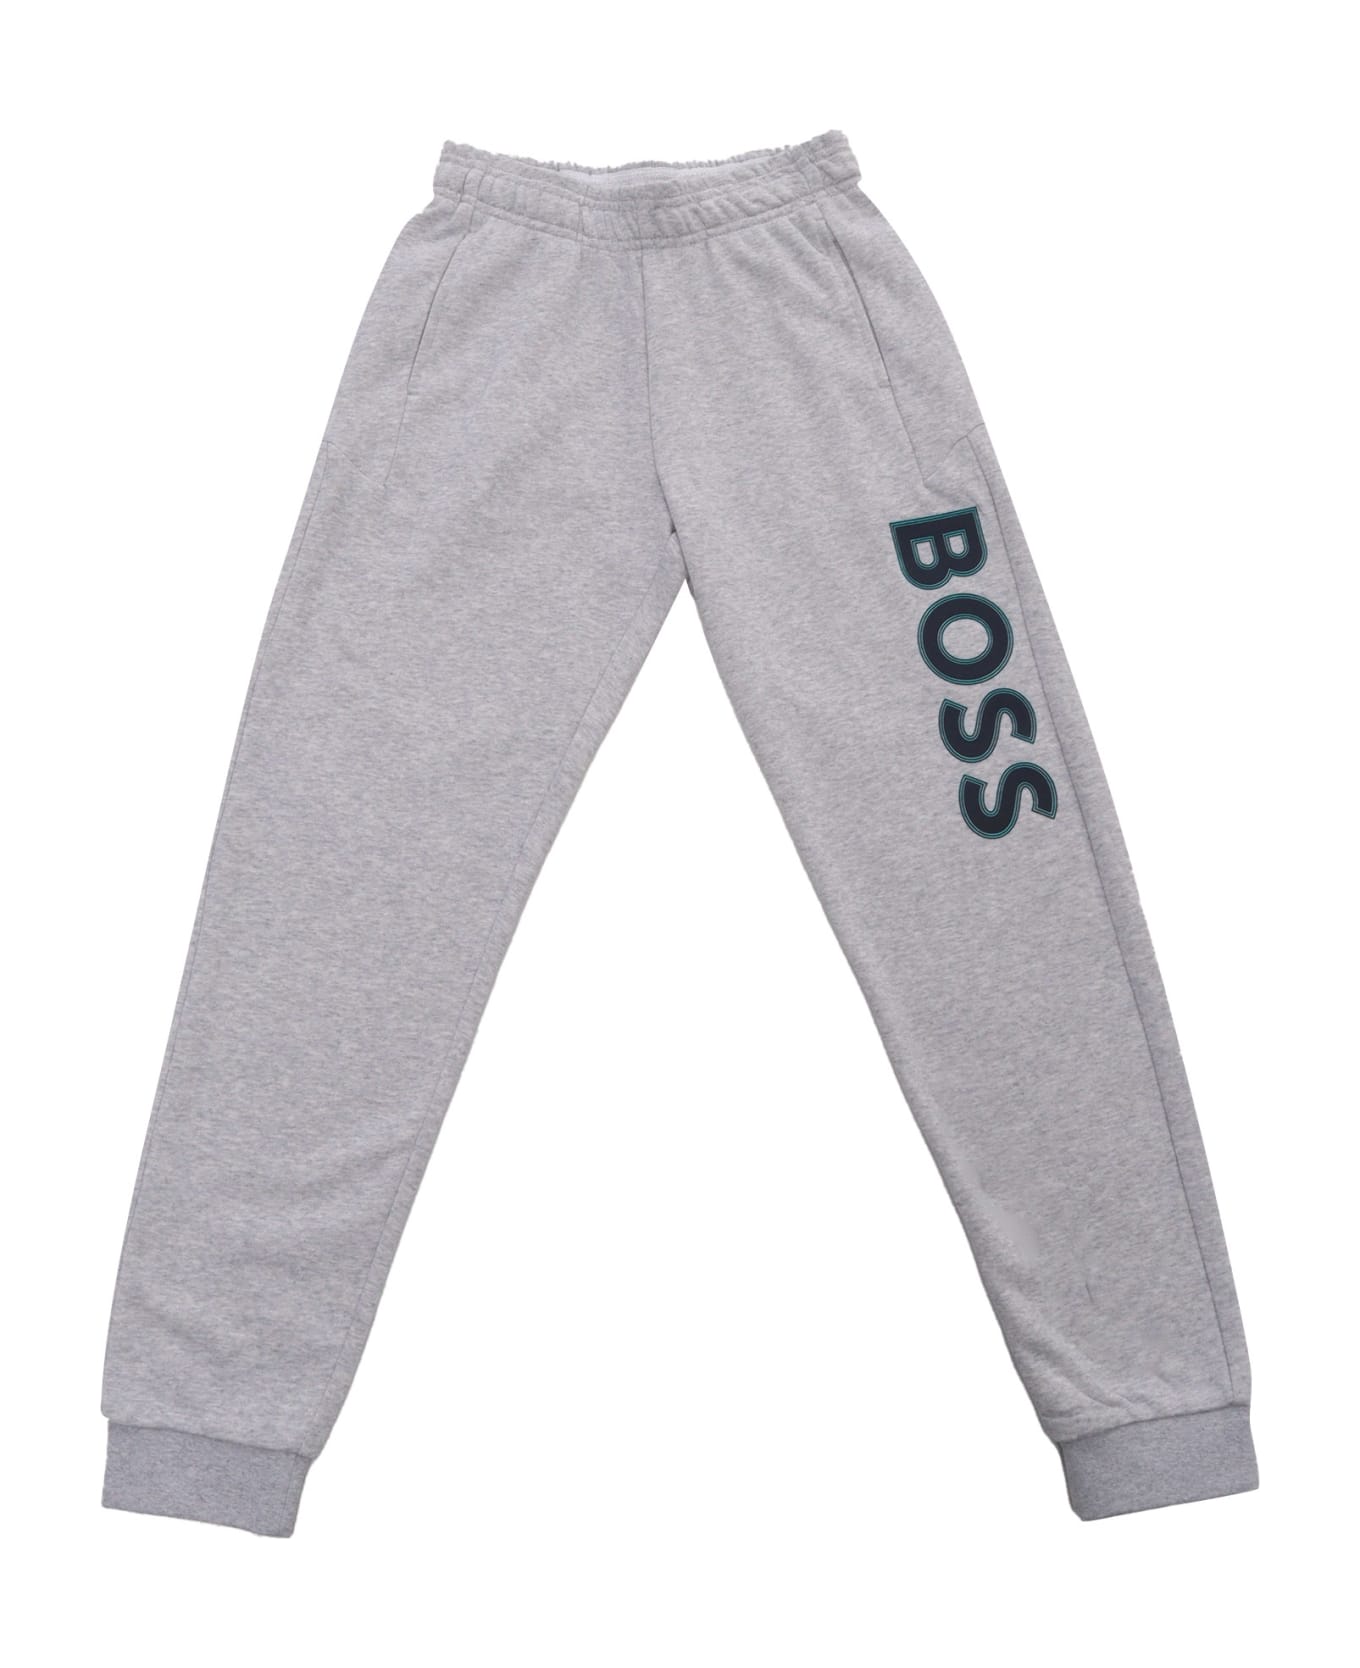 Hugo Boss Gray Jogging Pants - GREY ボトムス